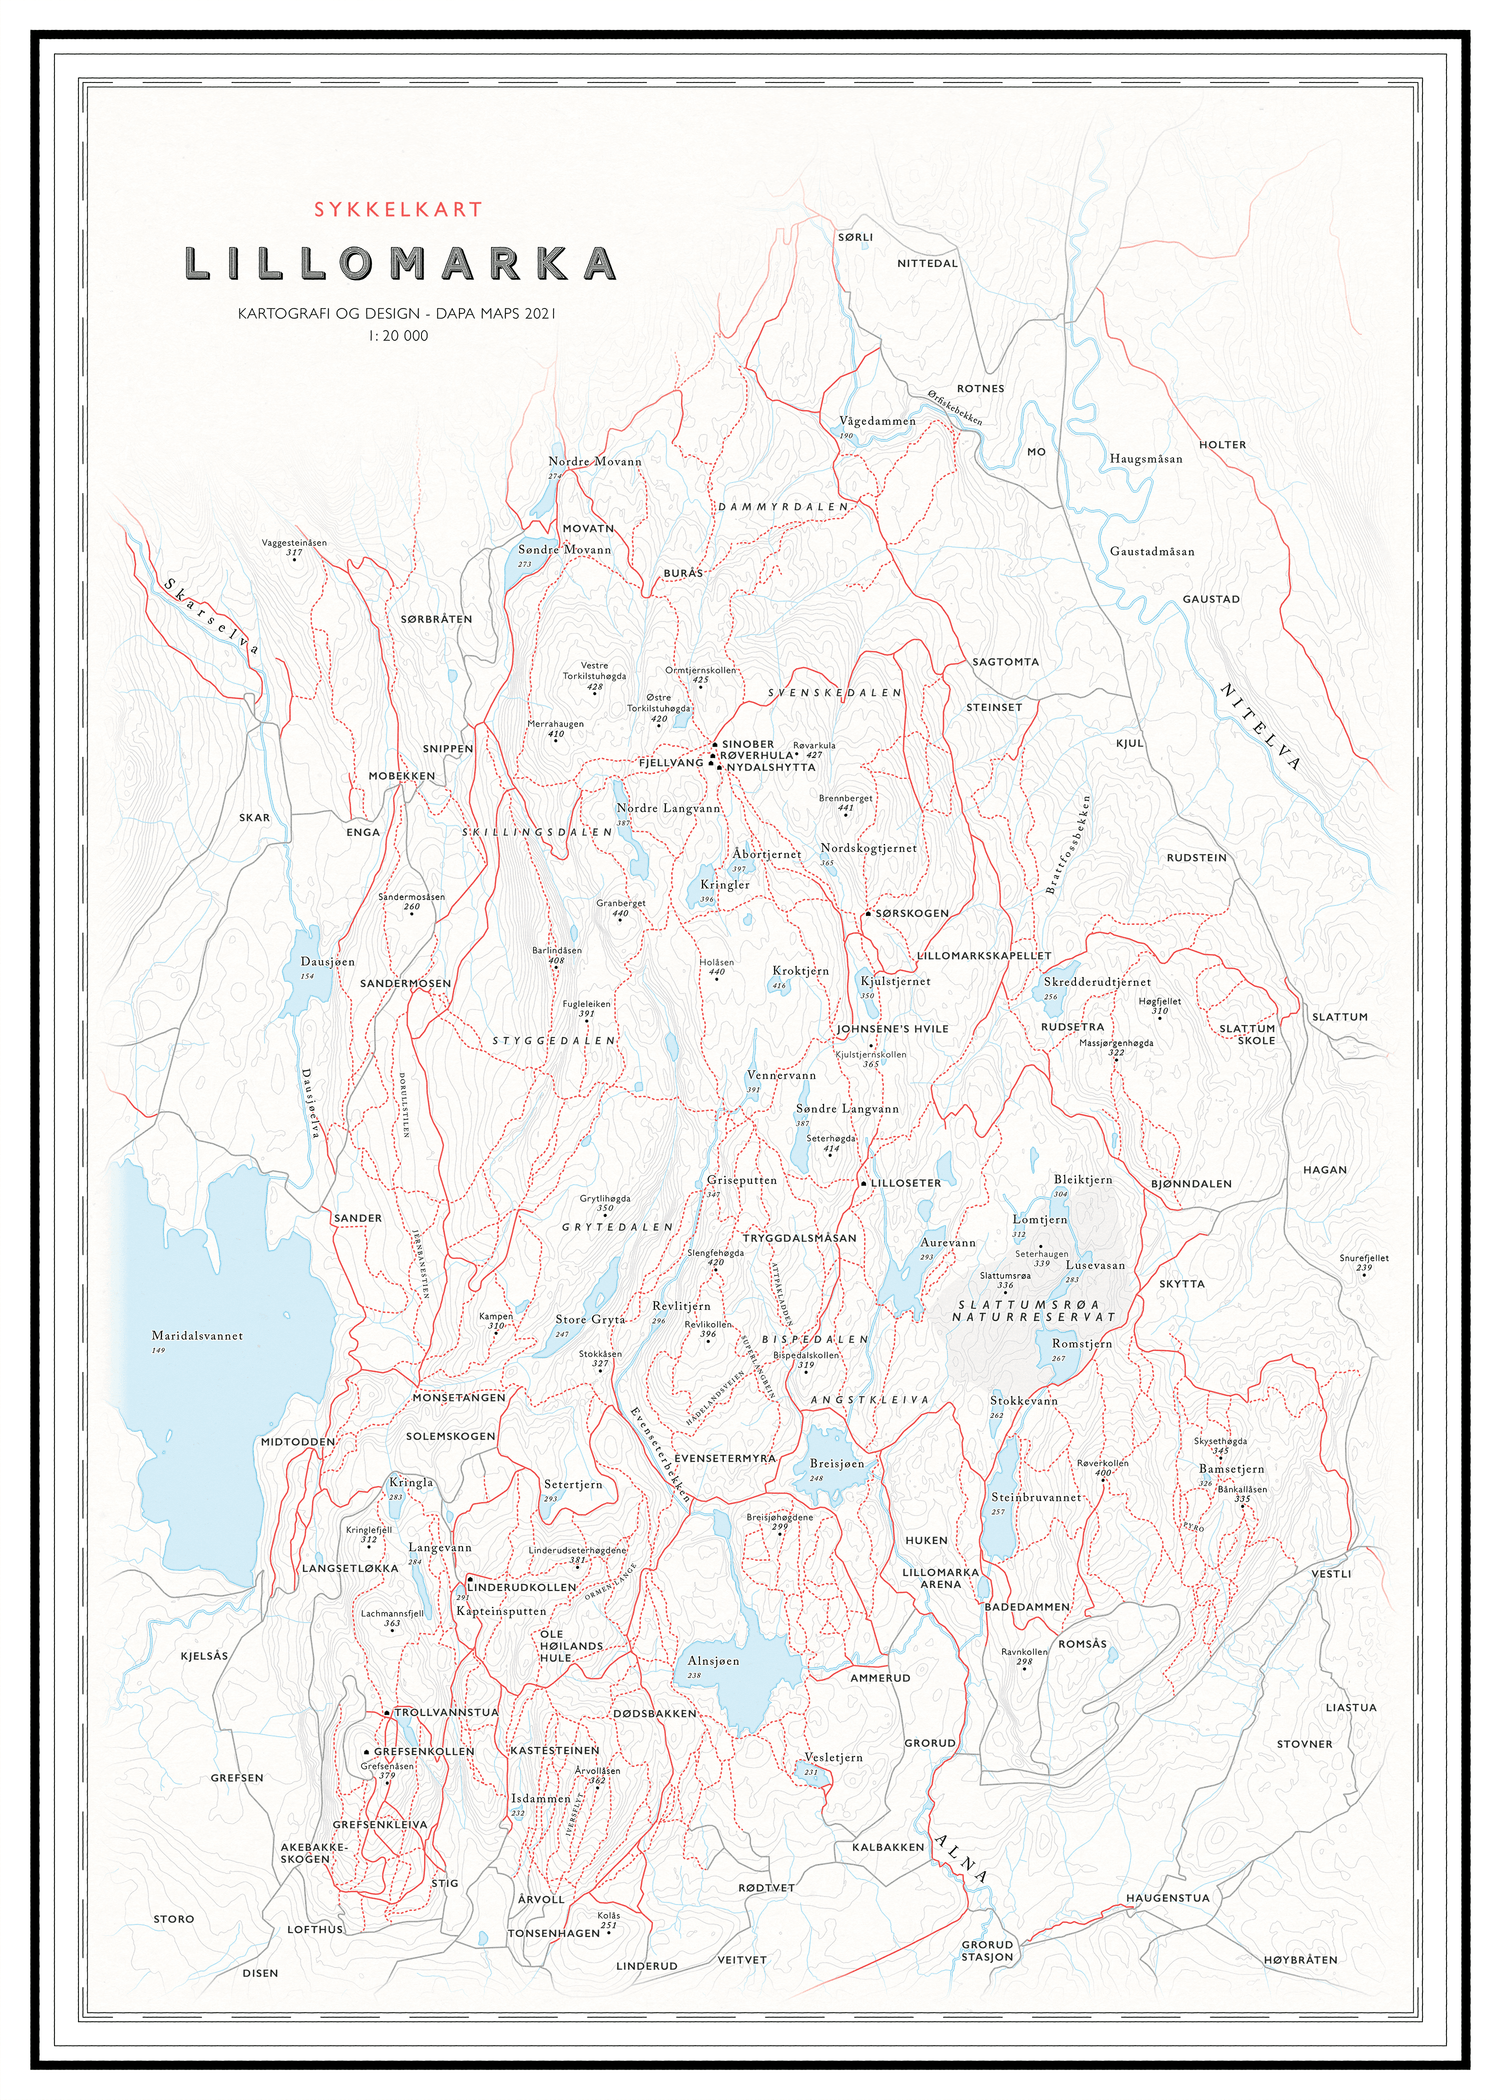 Sykkelkart Lillomarka (50x70 cm) - Dapa Maps